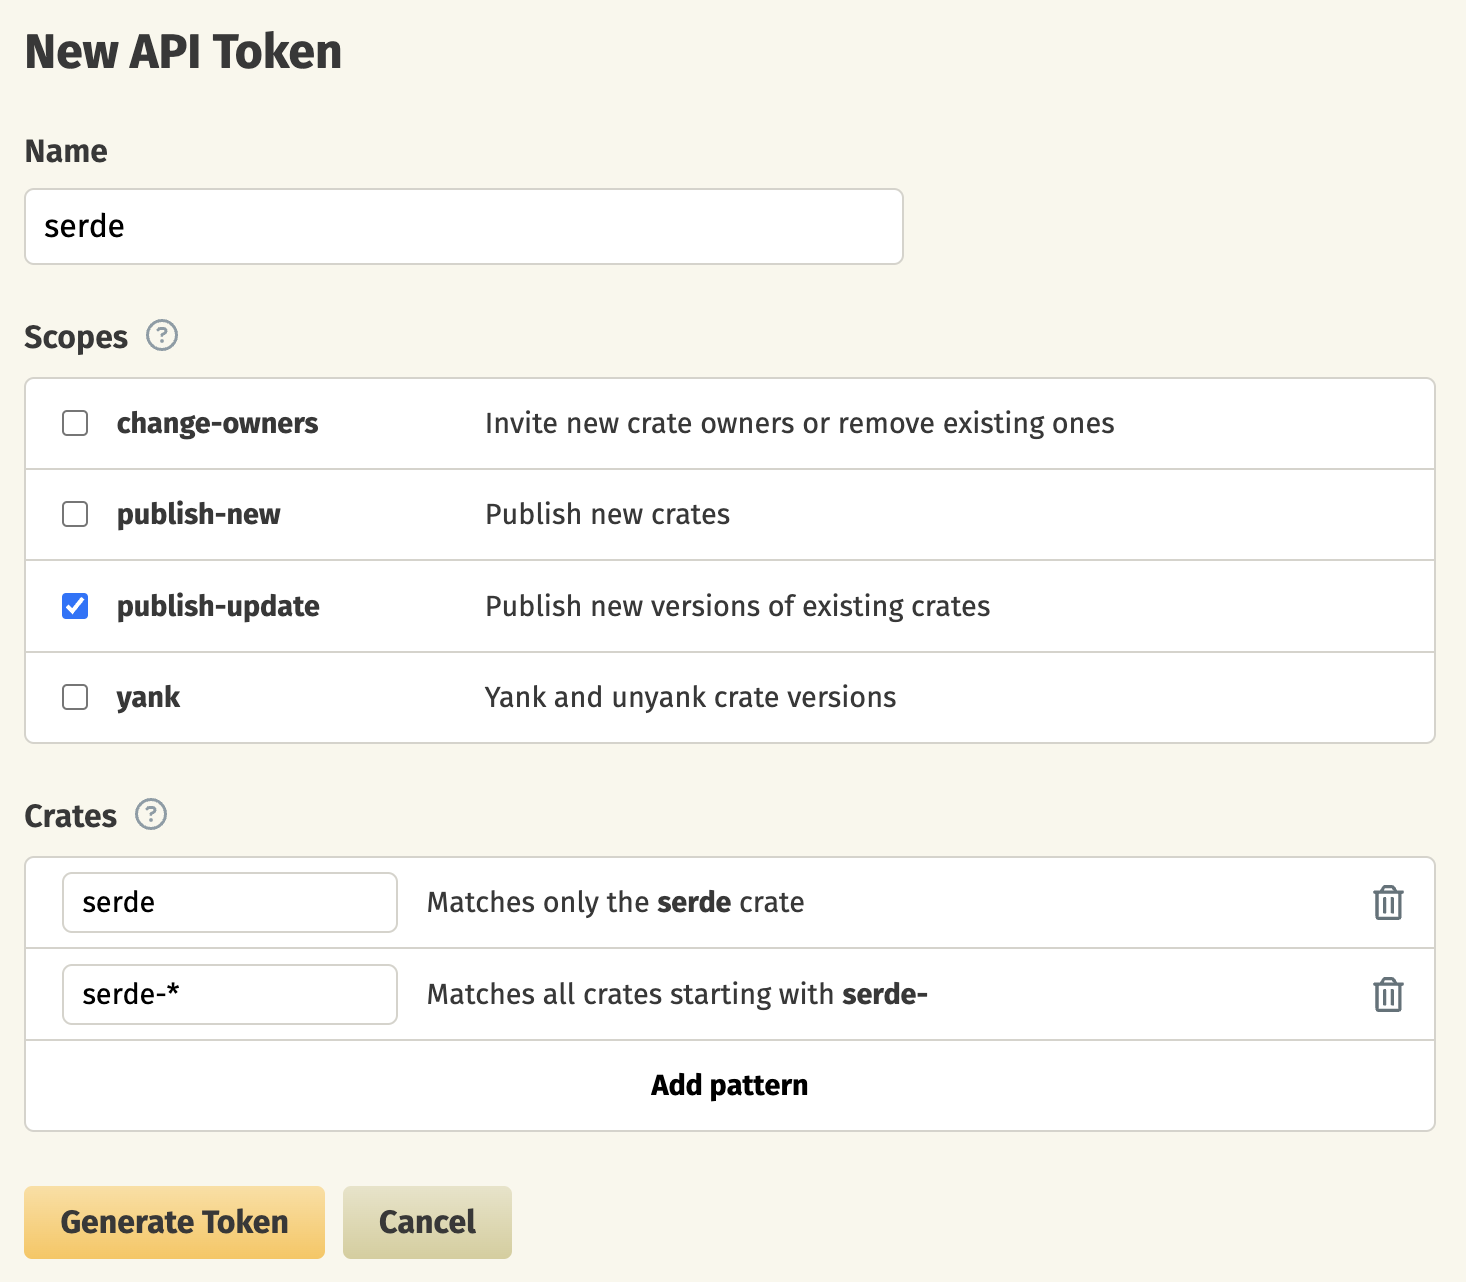 Screenshot of the "New API Token" page